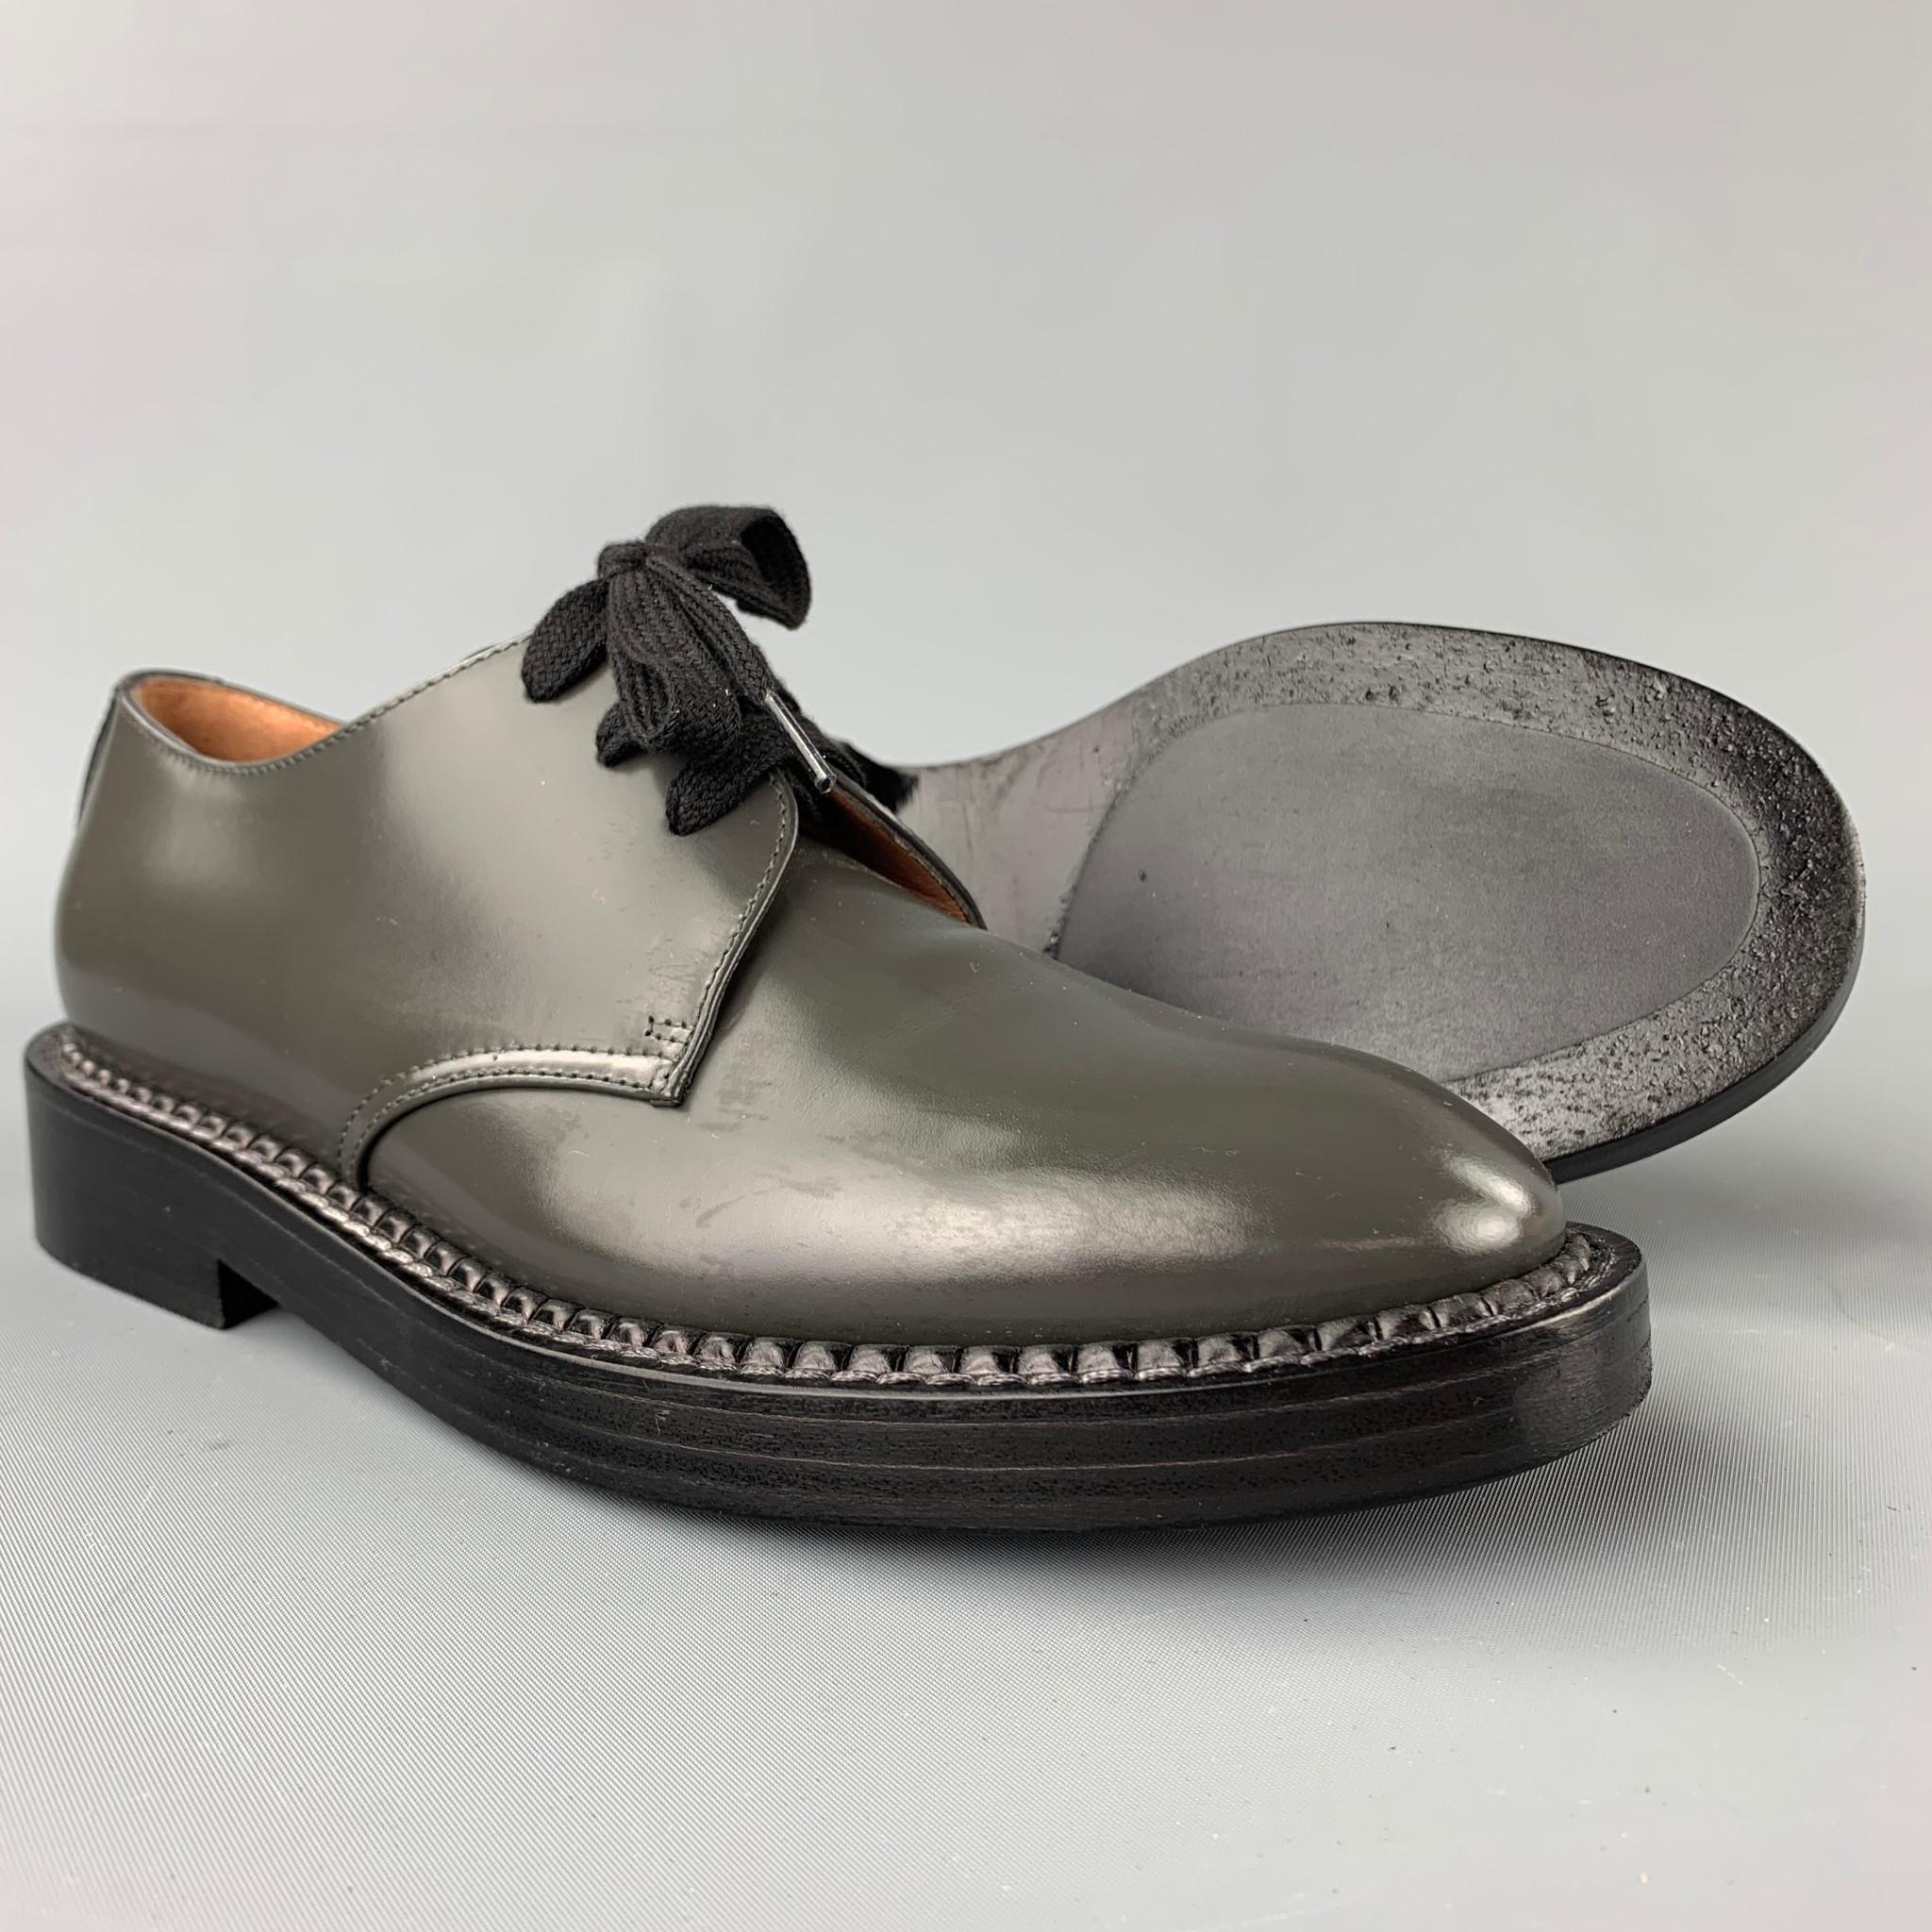 barani shoes origin